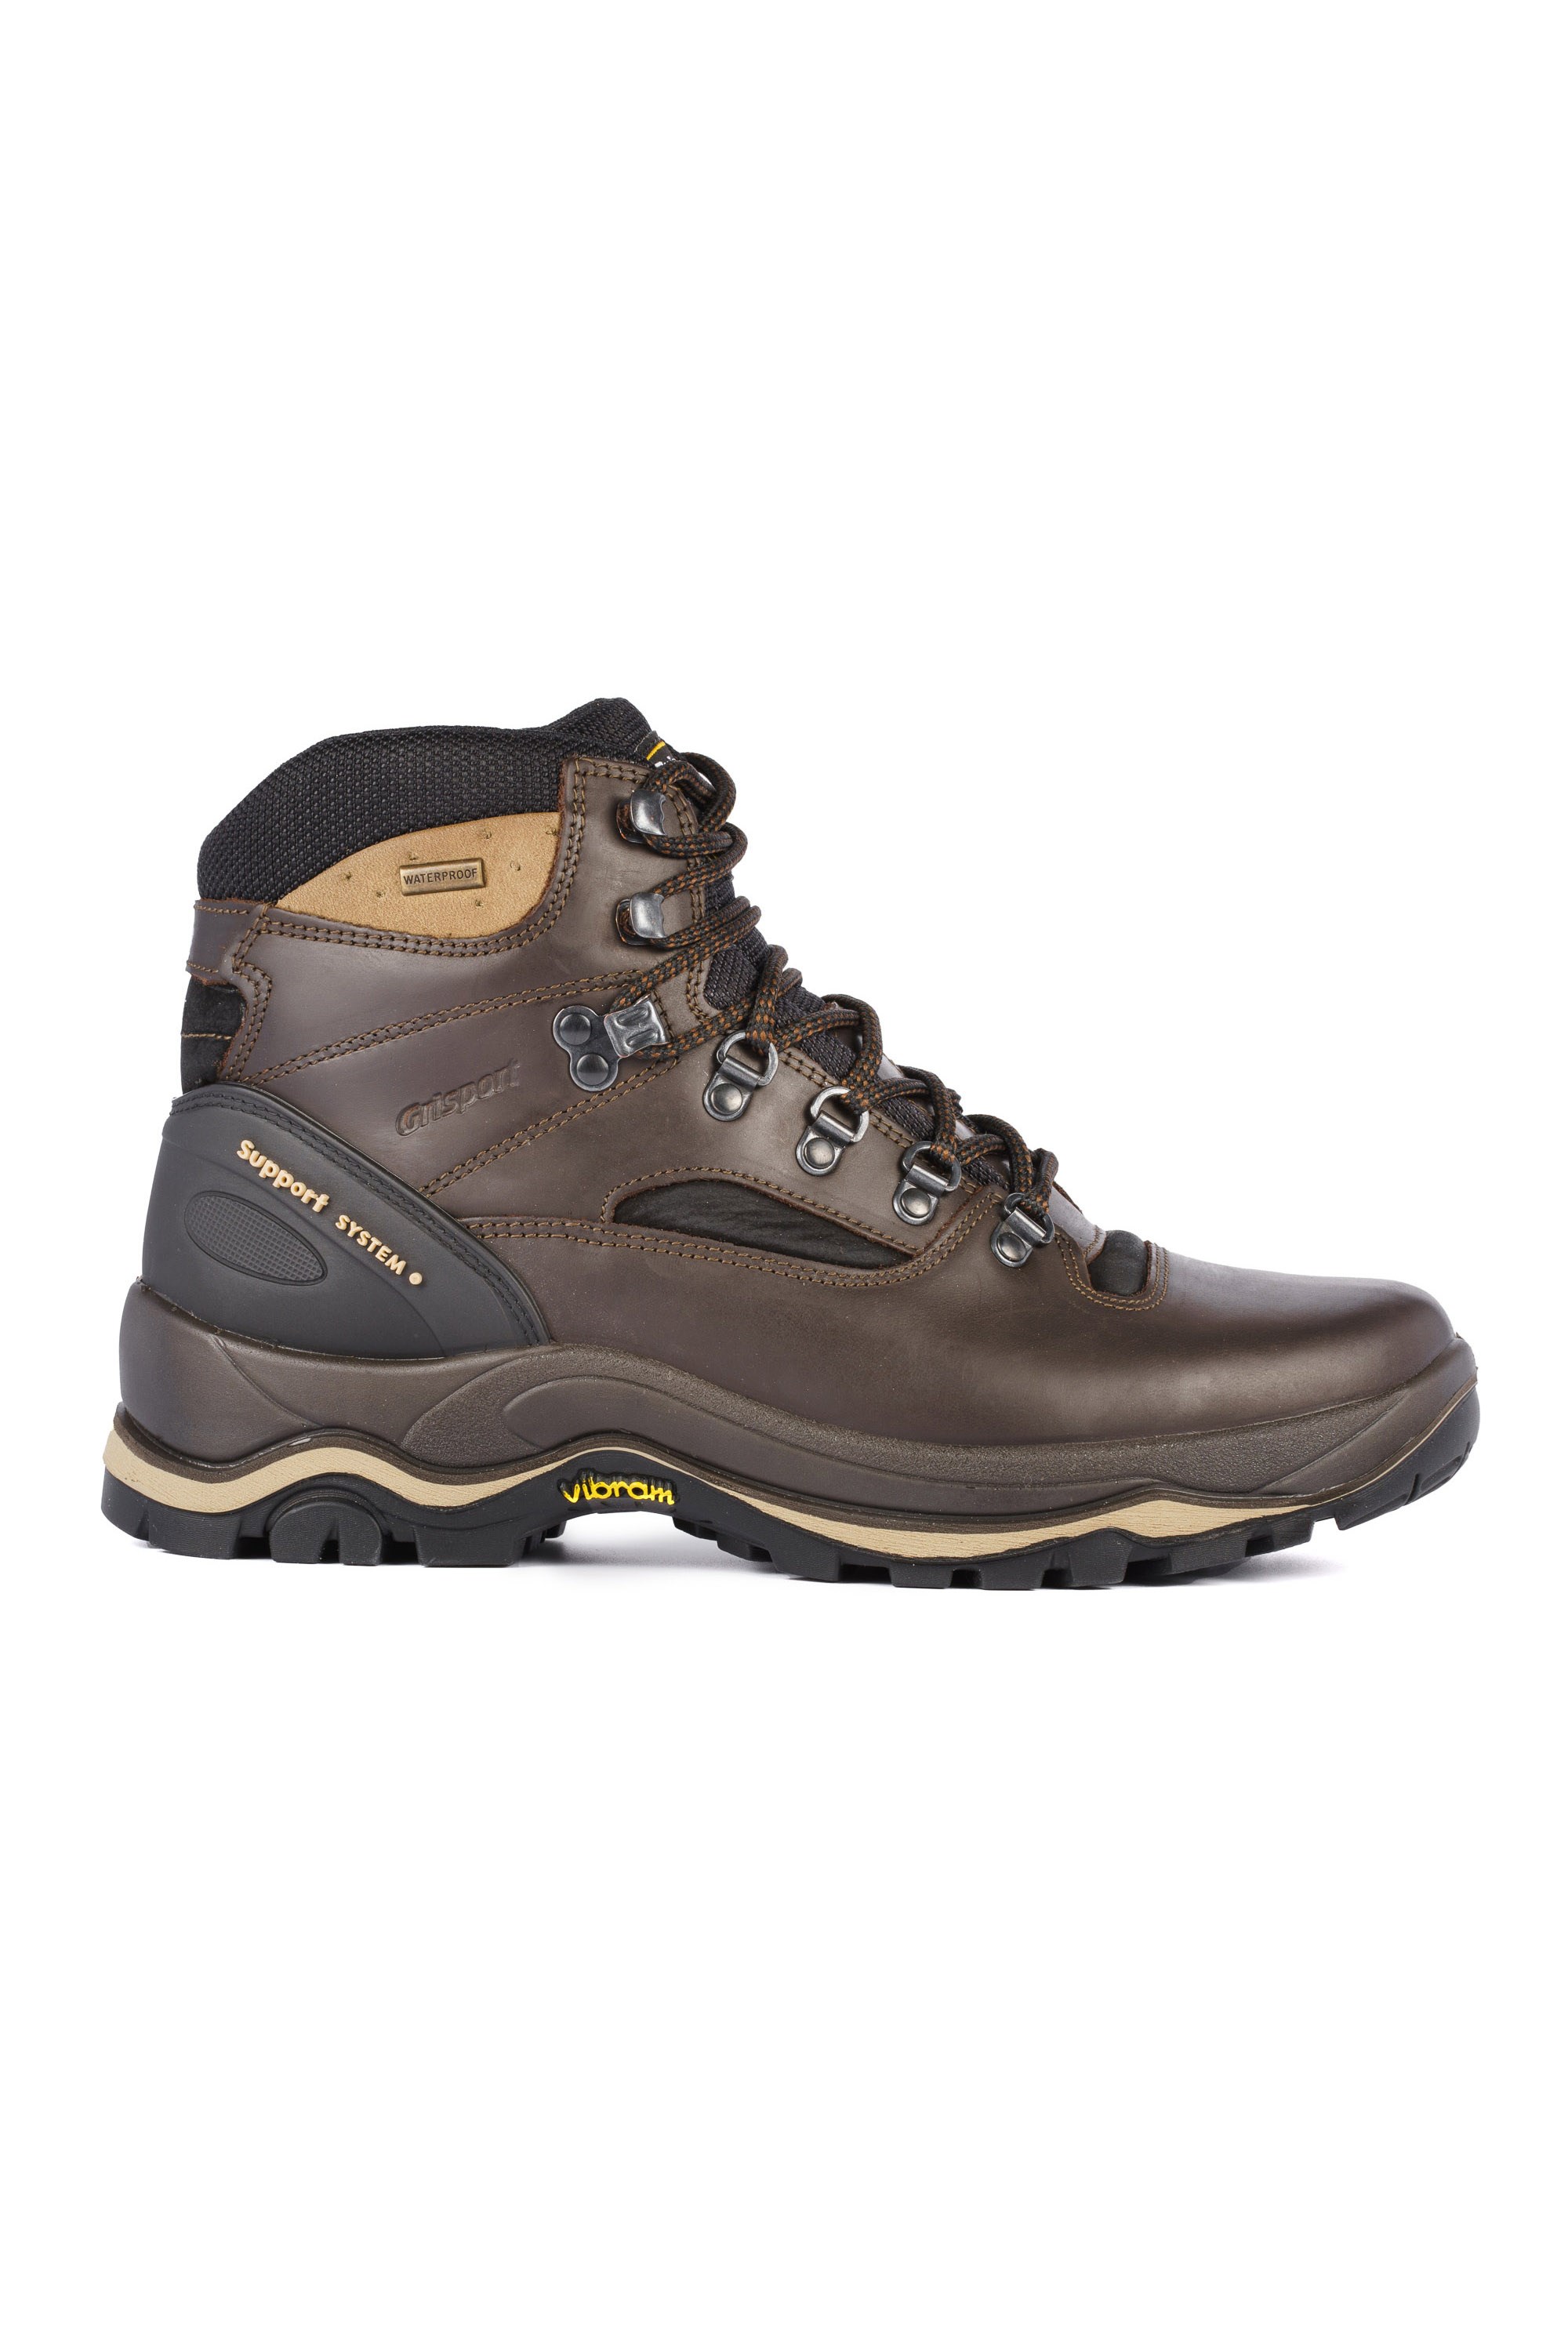 Grisport Mens Saracen Waterproof Hiking Boots (Brown)